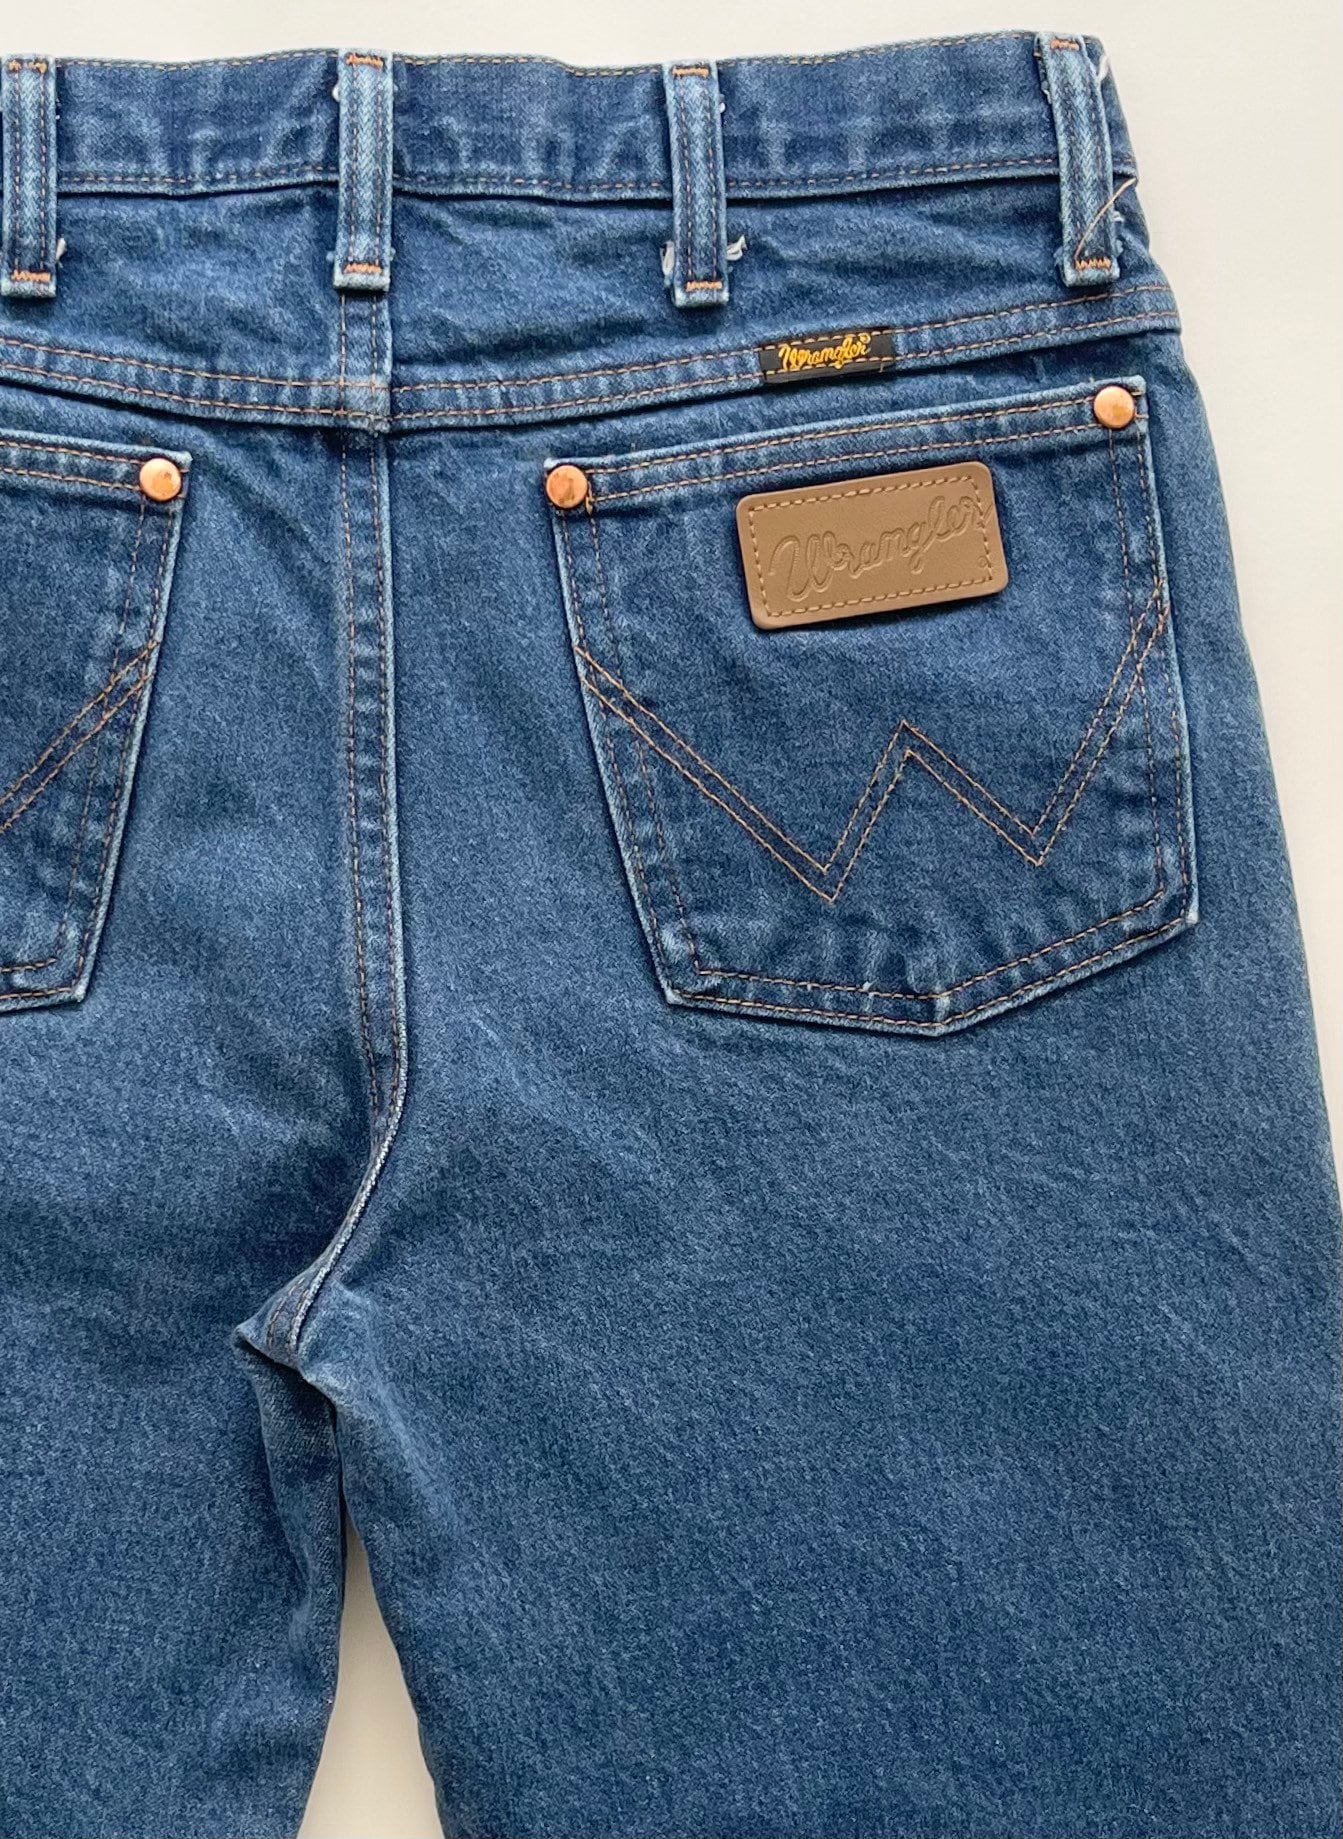 Vintage Wrangler Denim Jeans Pants Medium Dark Wash All Cotton 80s Made ...